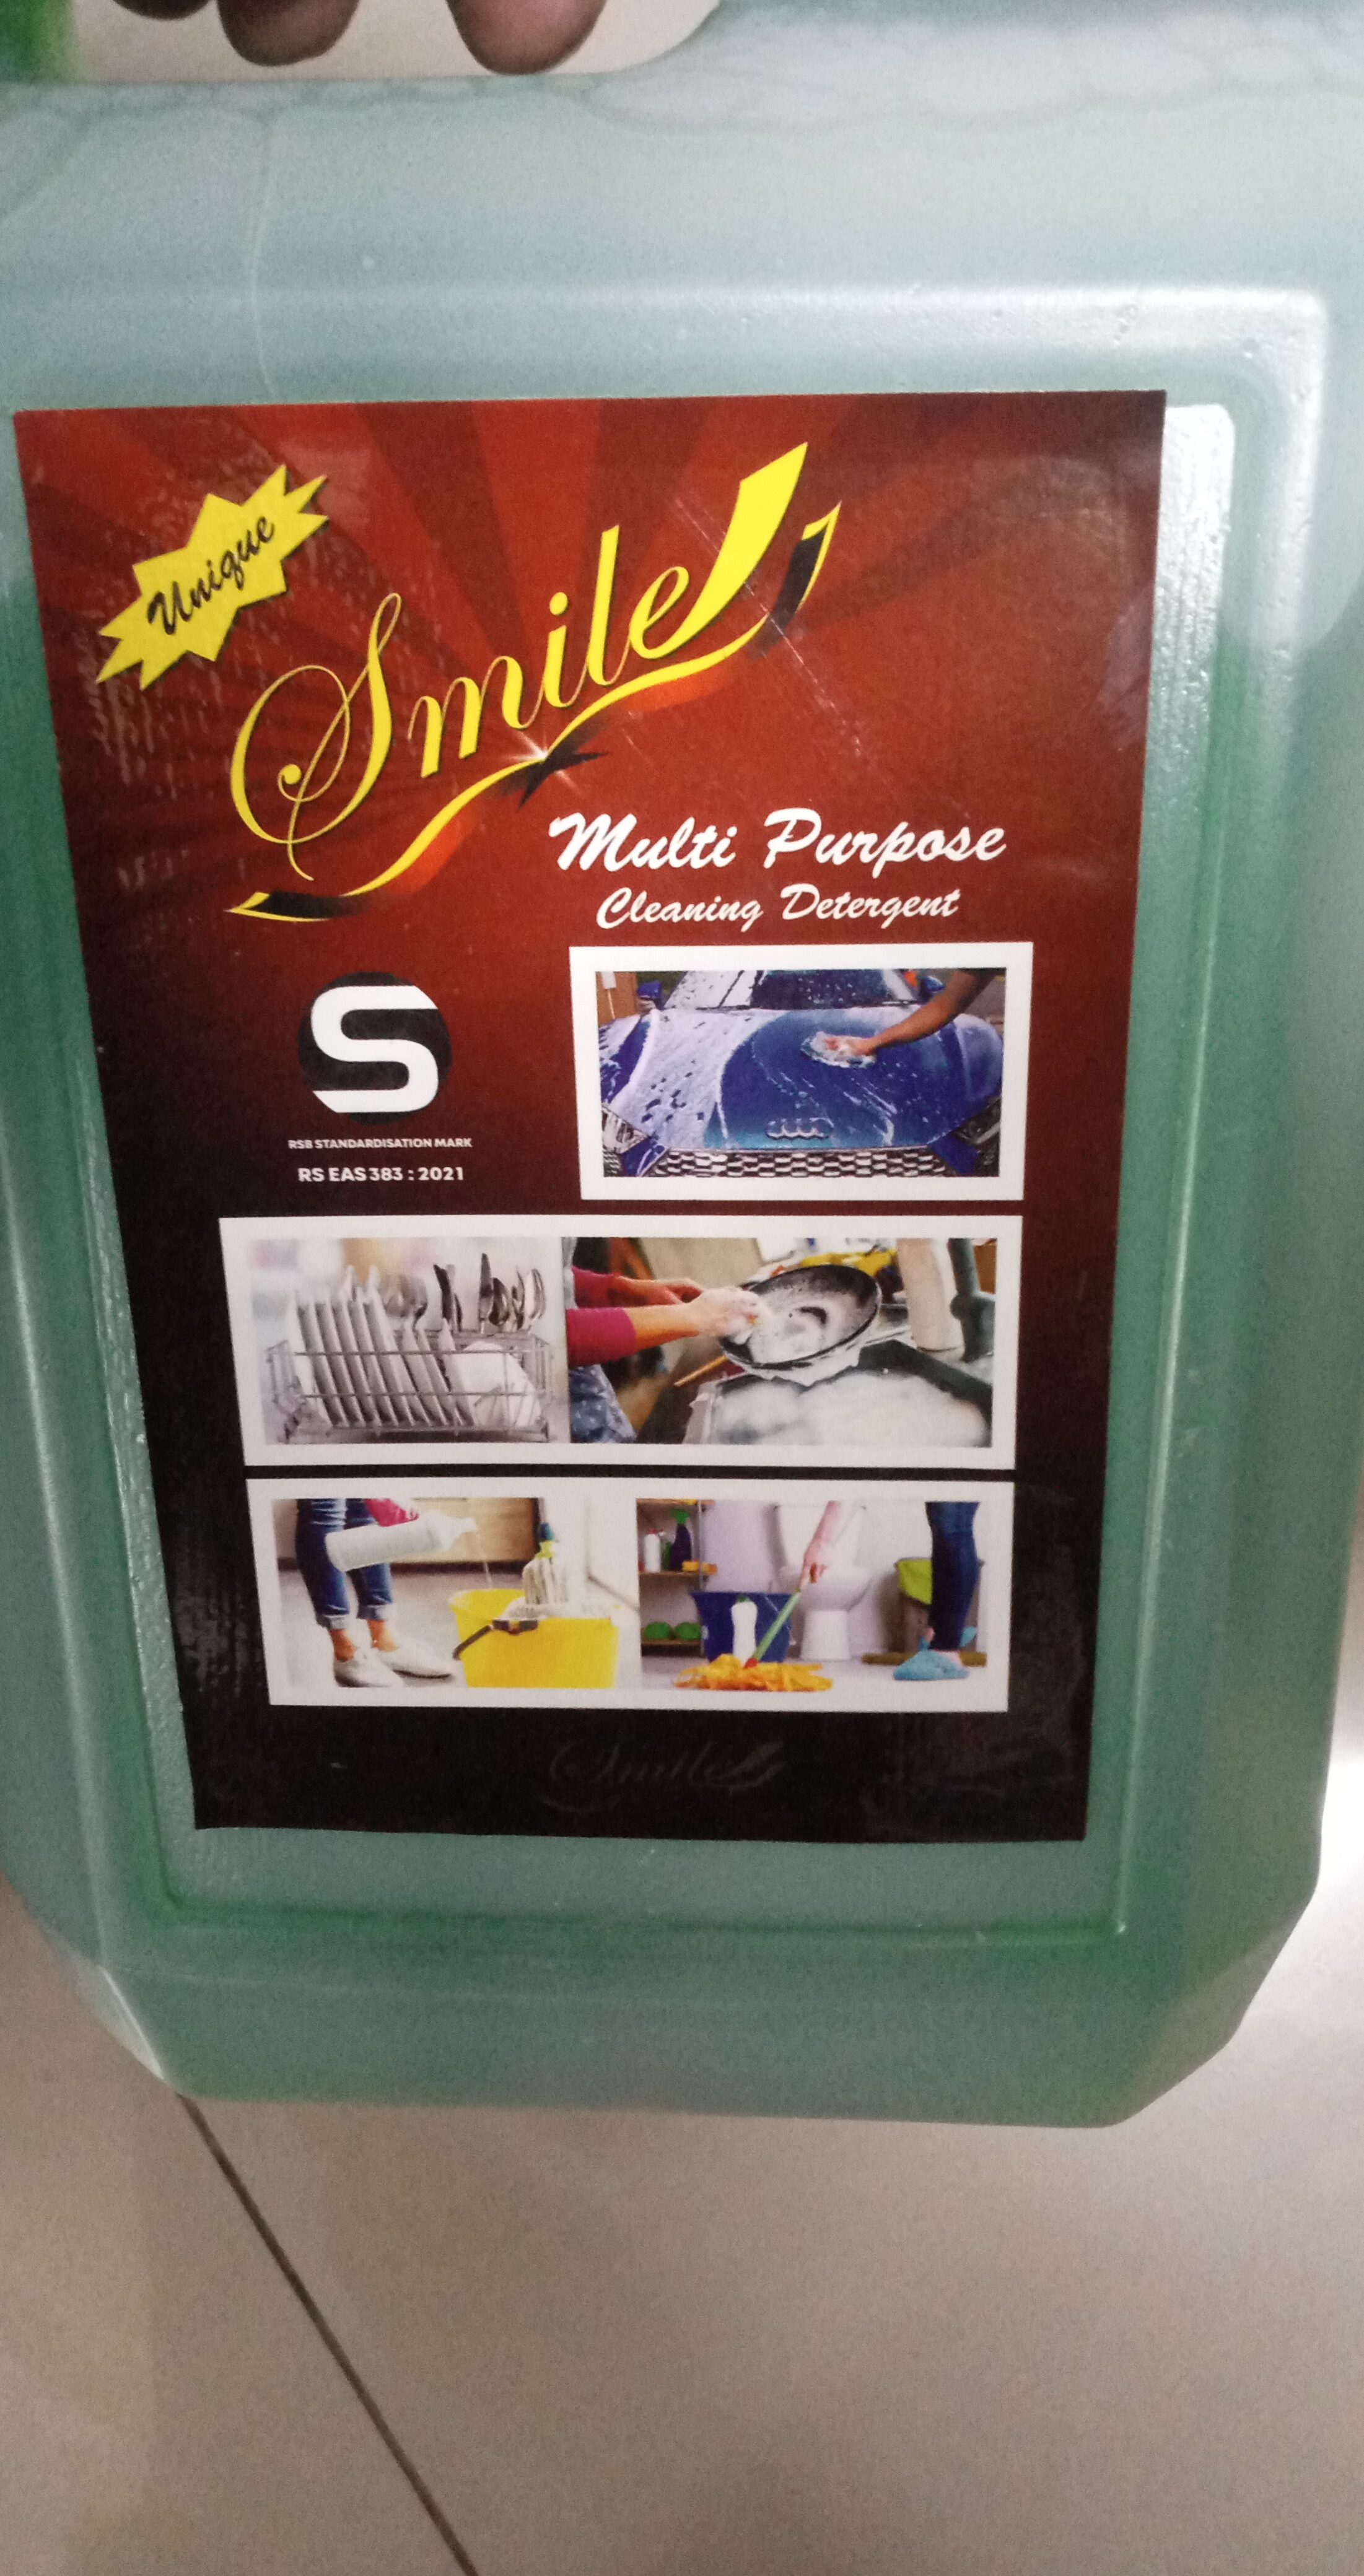 SMILE MULTI PURPOSE CLEANING DETERGENT - Product - en